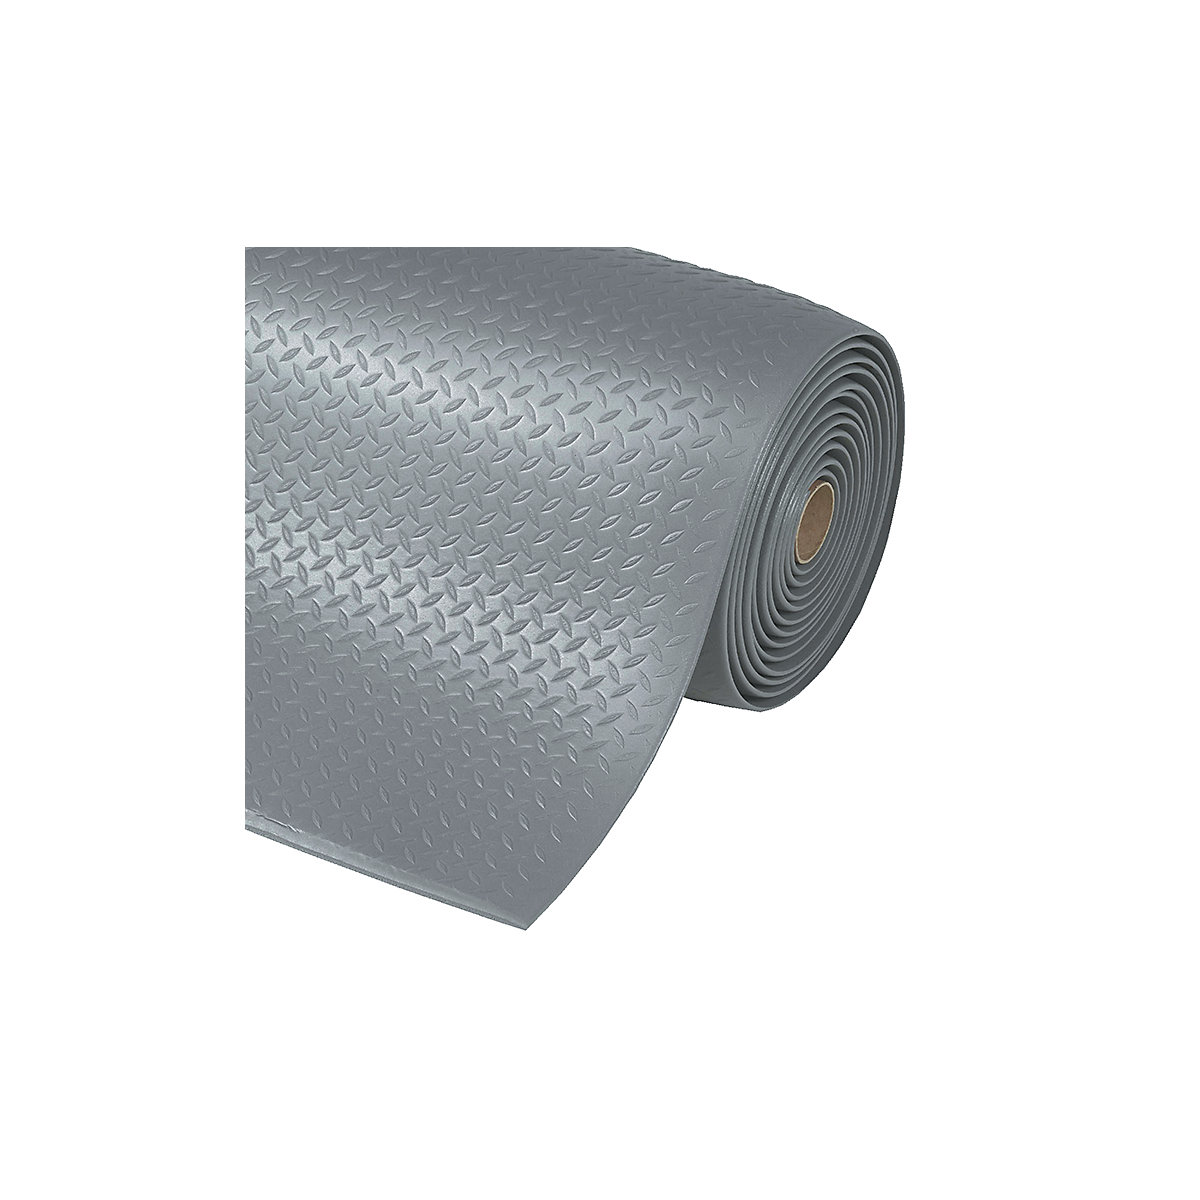 Werkplaatsmat, Diamond Sof-Tred™ – NOTRAX, breedte 1220 mm, per str. m, grijs-4